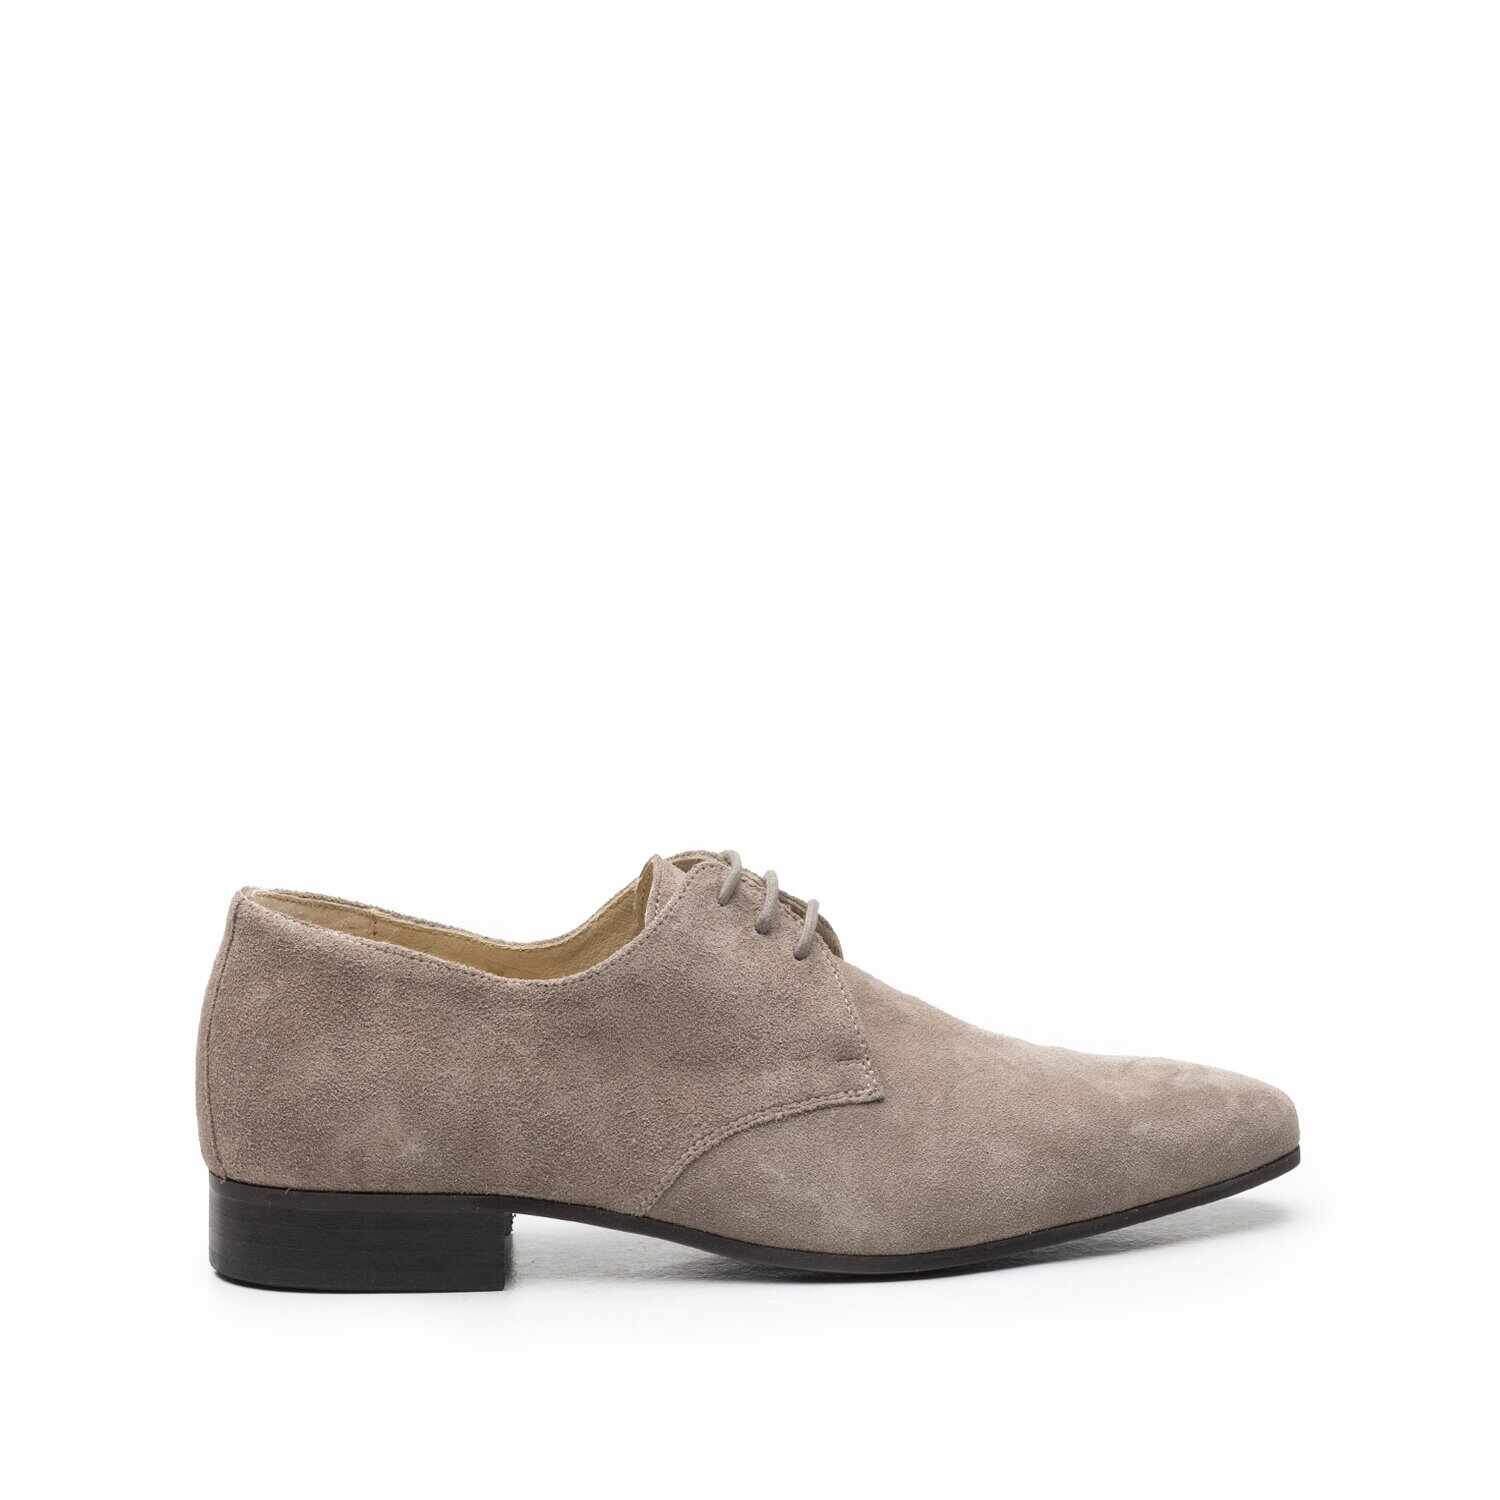 Pantofi casual barbati din piele naturala, Leofex - 112-7 taupe velur